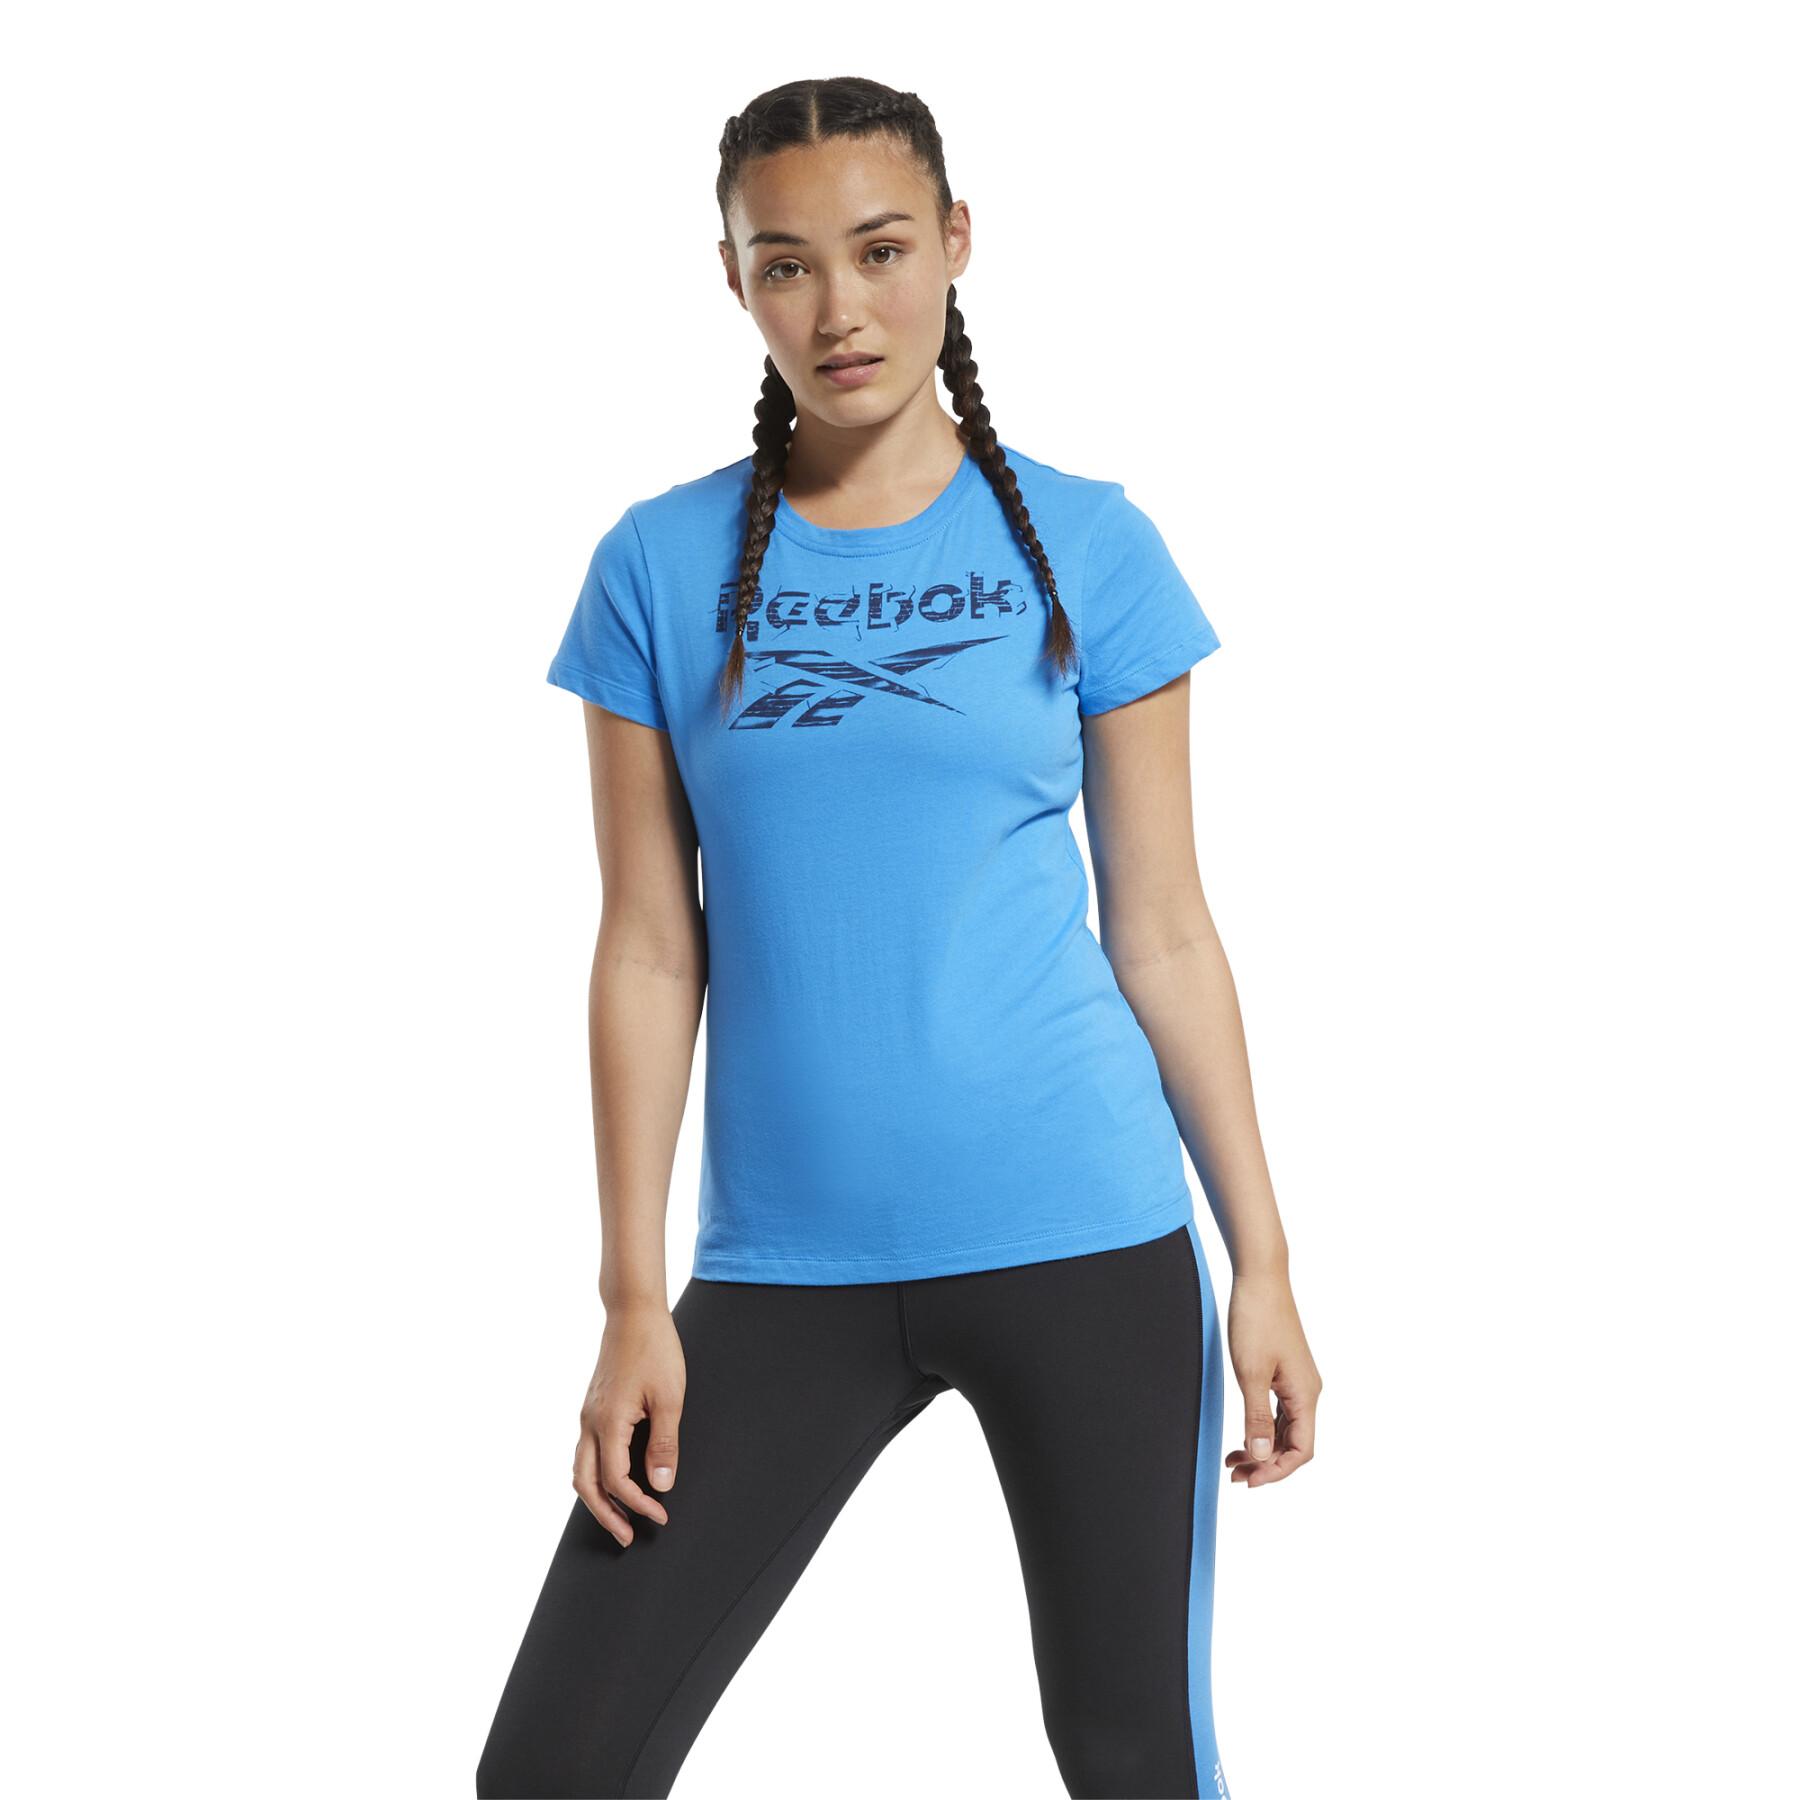 Dames-T-shirt Reebok Training Essentials Stacked Logo